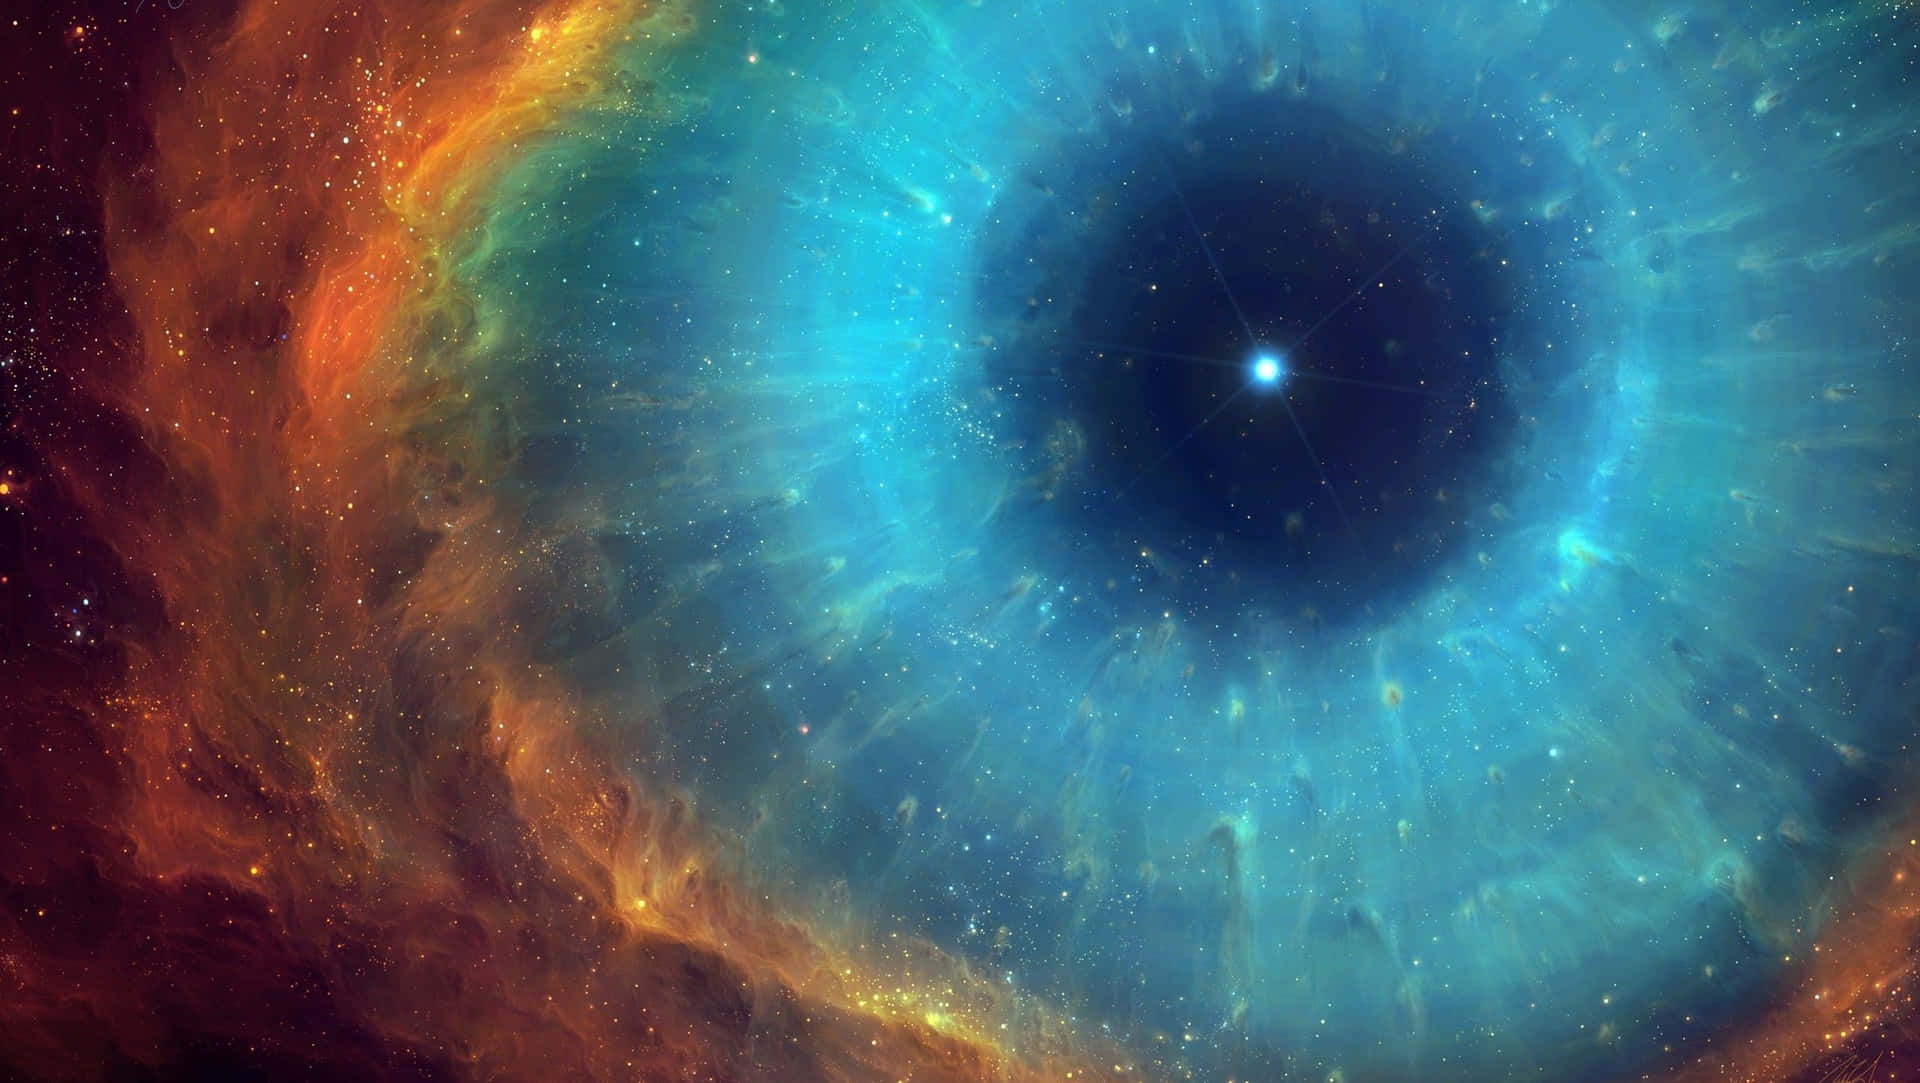 Experience awe while gazing at a Supernova